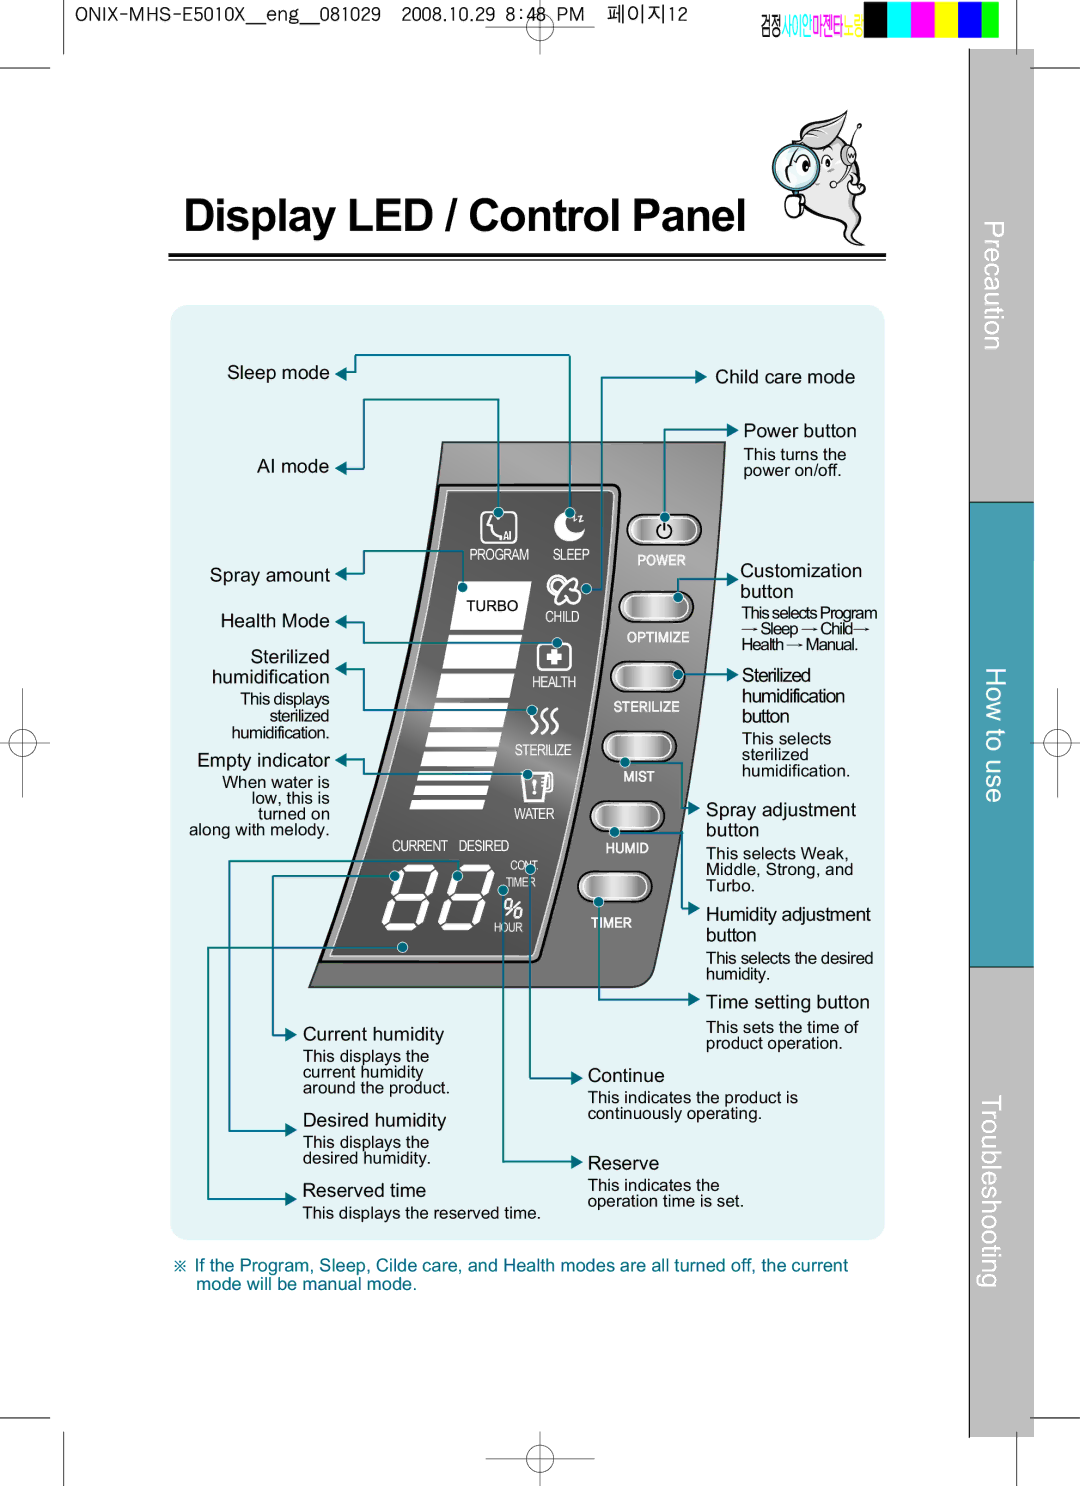 Coway MHS-E5010X manual Display LED / Control Panel 